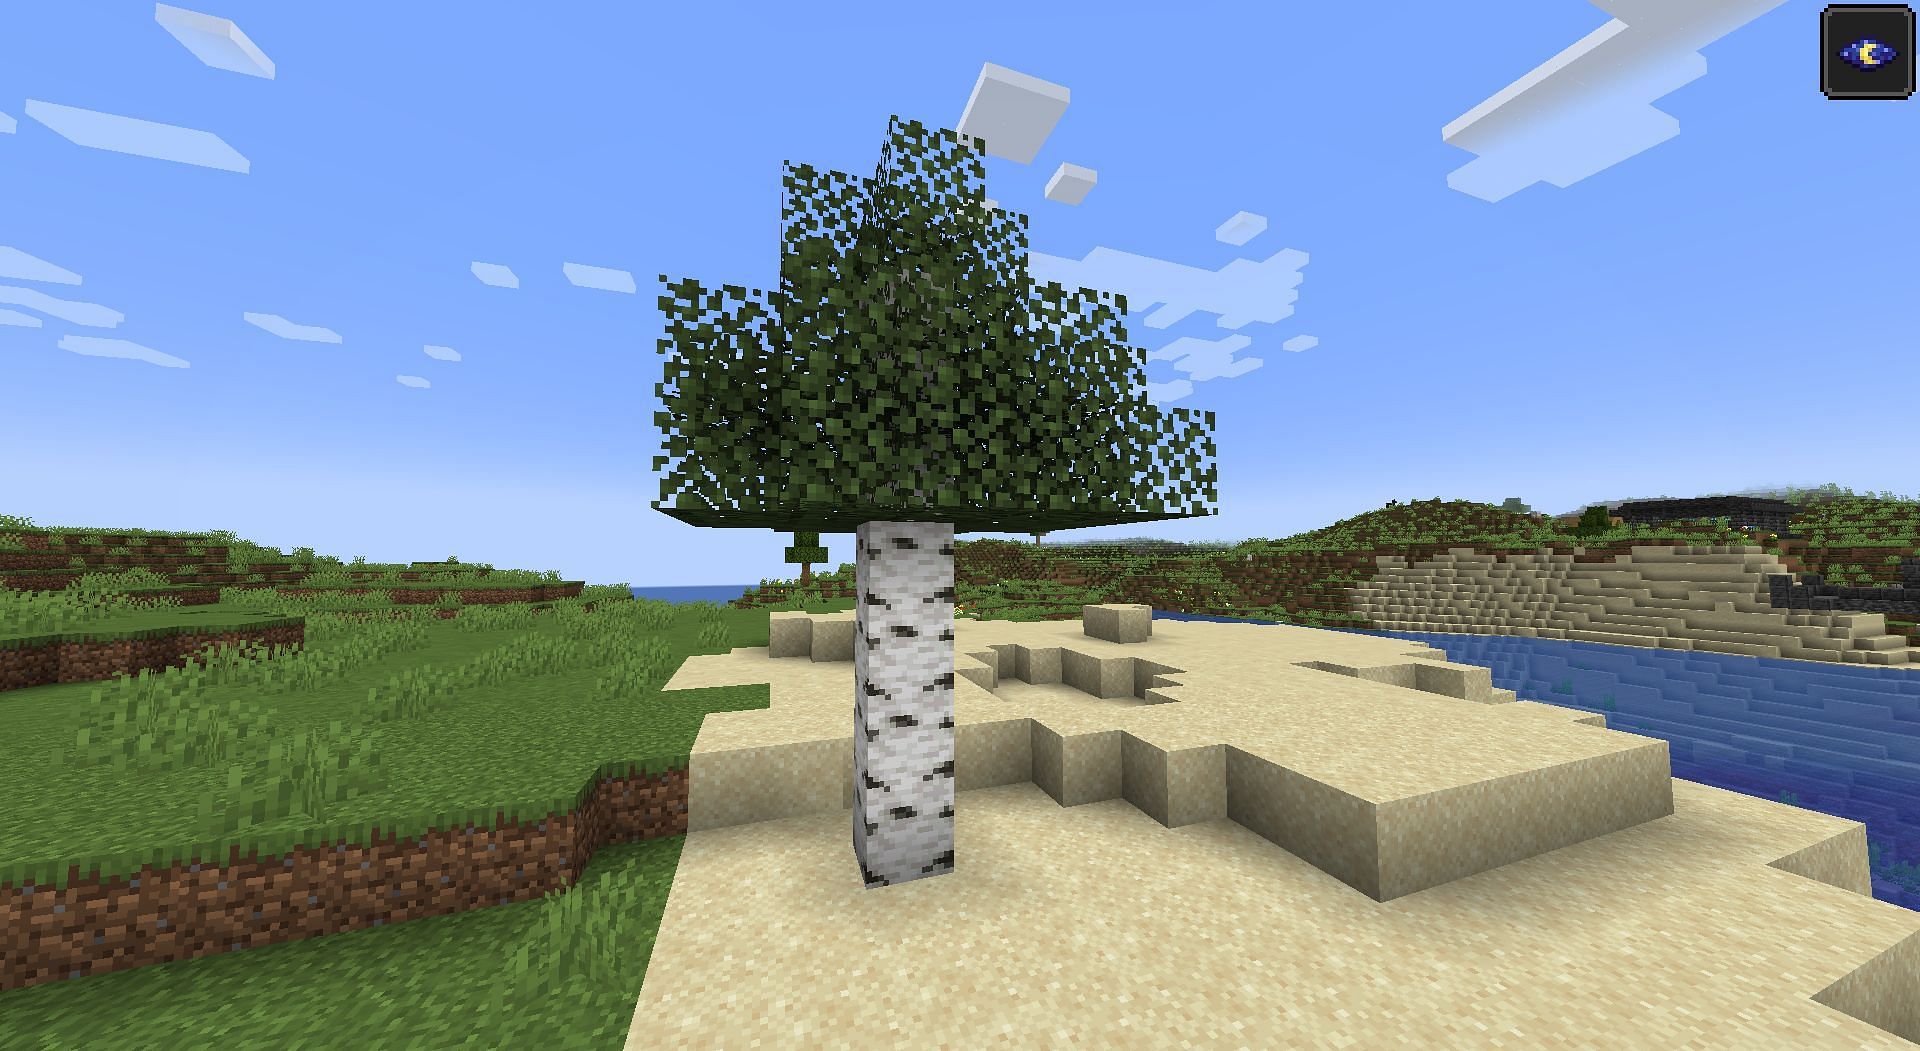 Birch tree generated on a beach near plains (Image via Minecraft snapshot 22w18a)